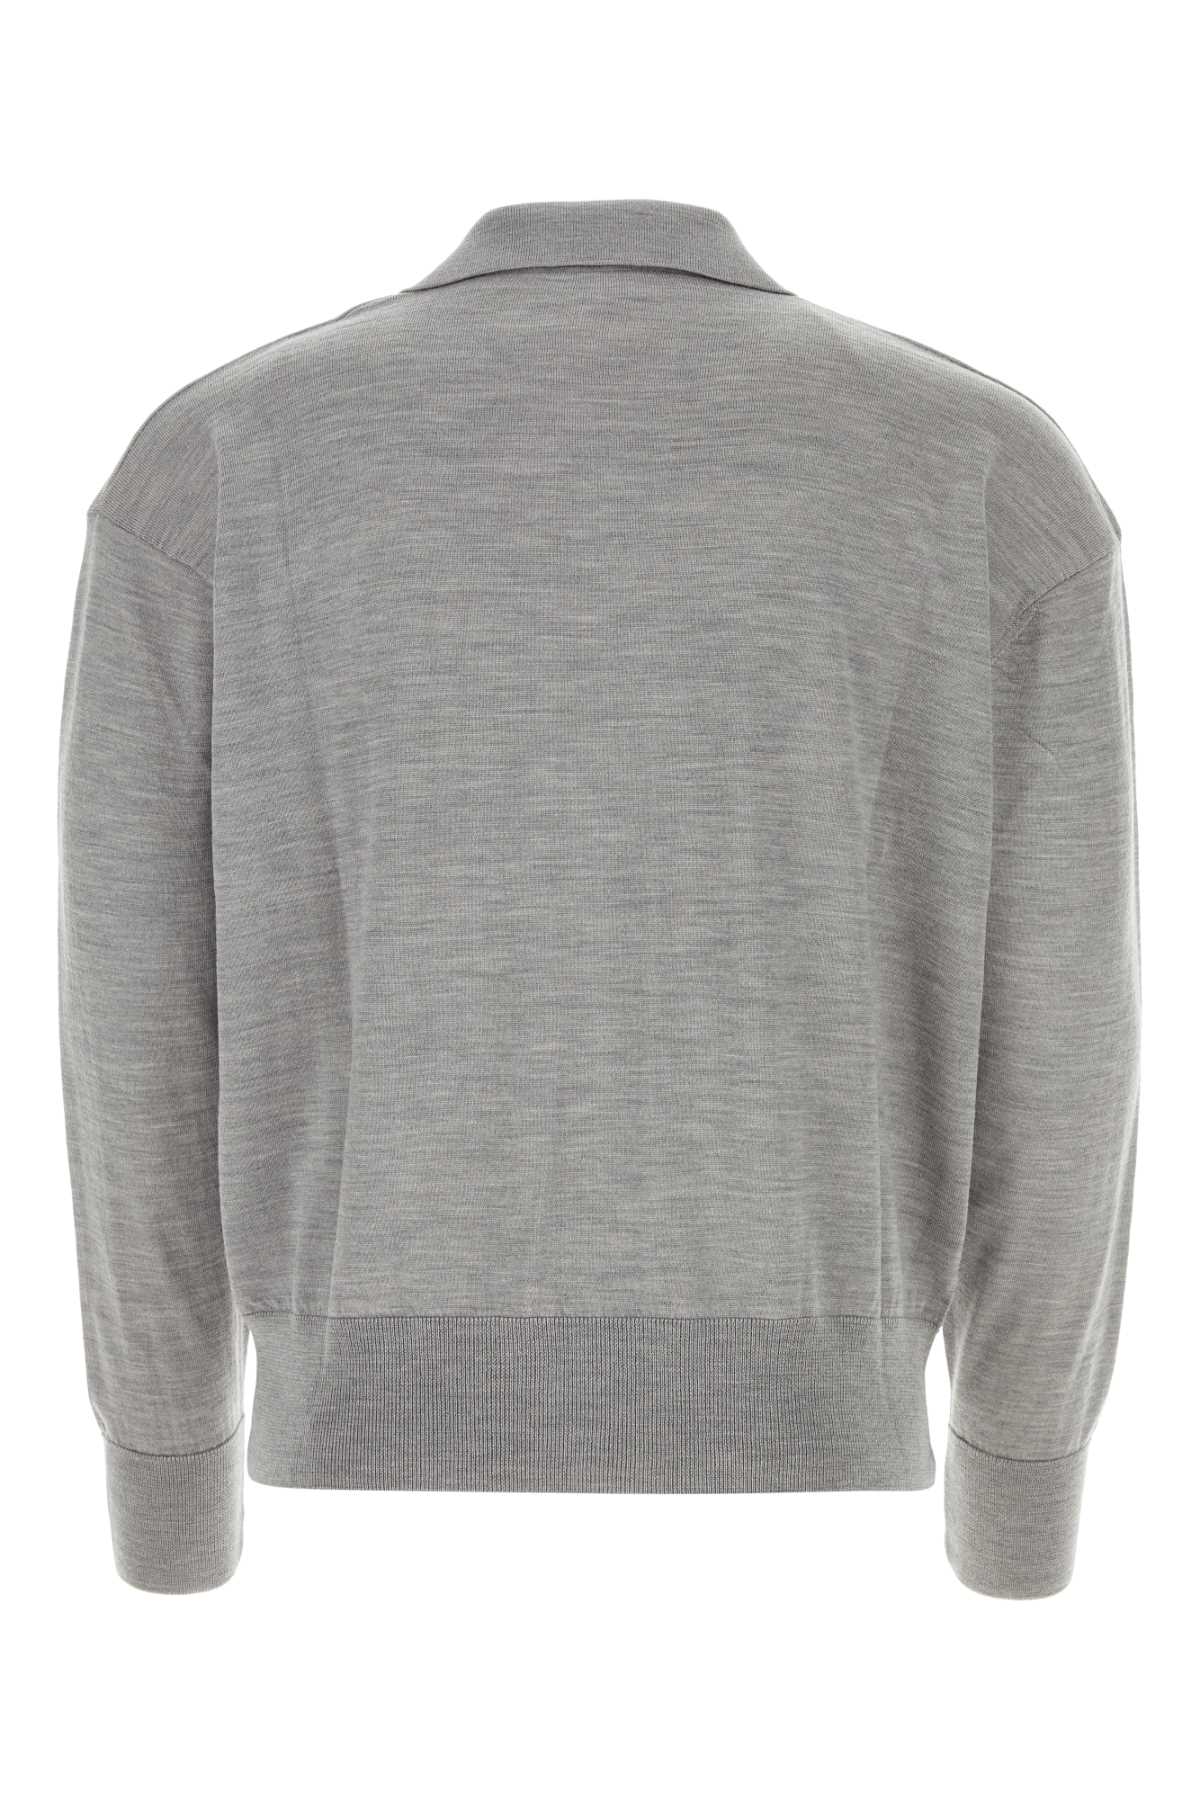 Shop Ami Alexandre Mattiussi Grey Wool Sweater In Heathergrey